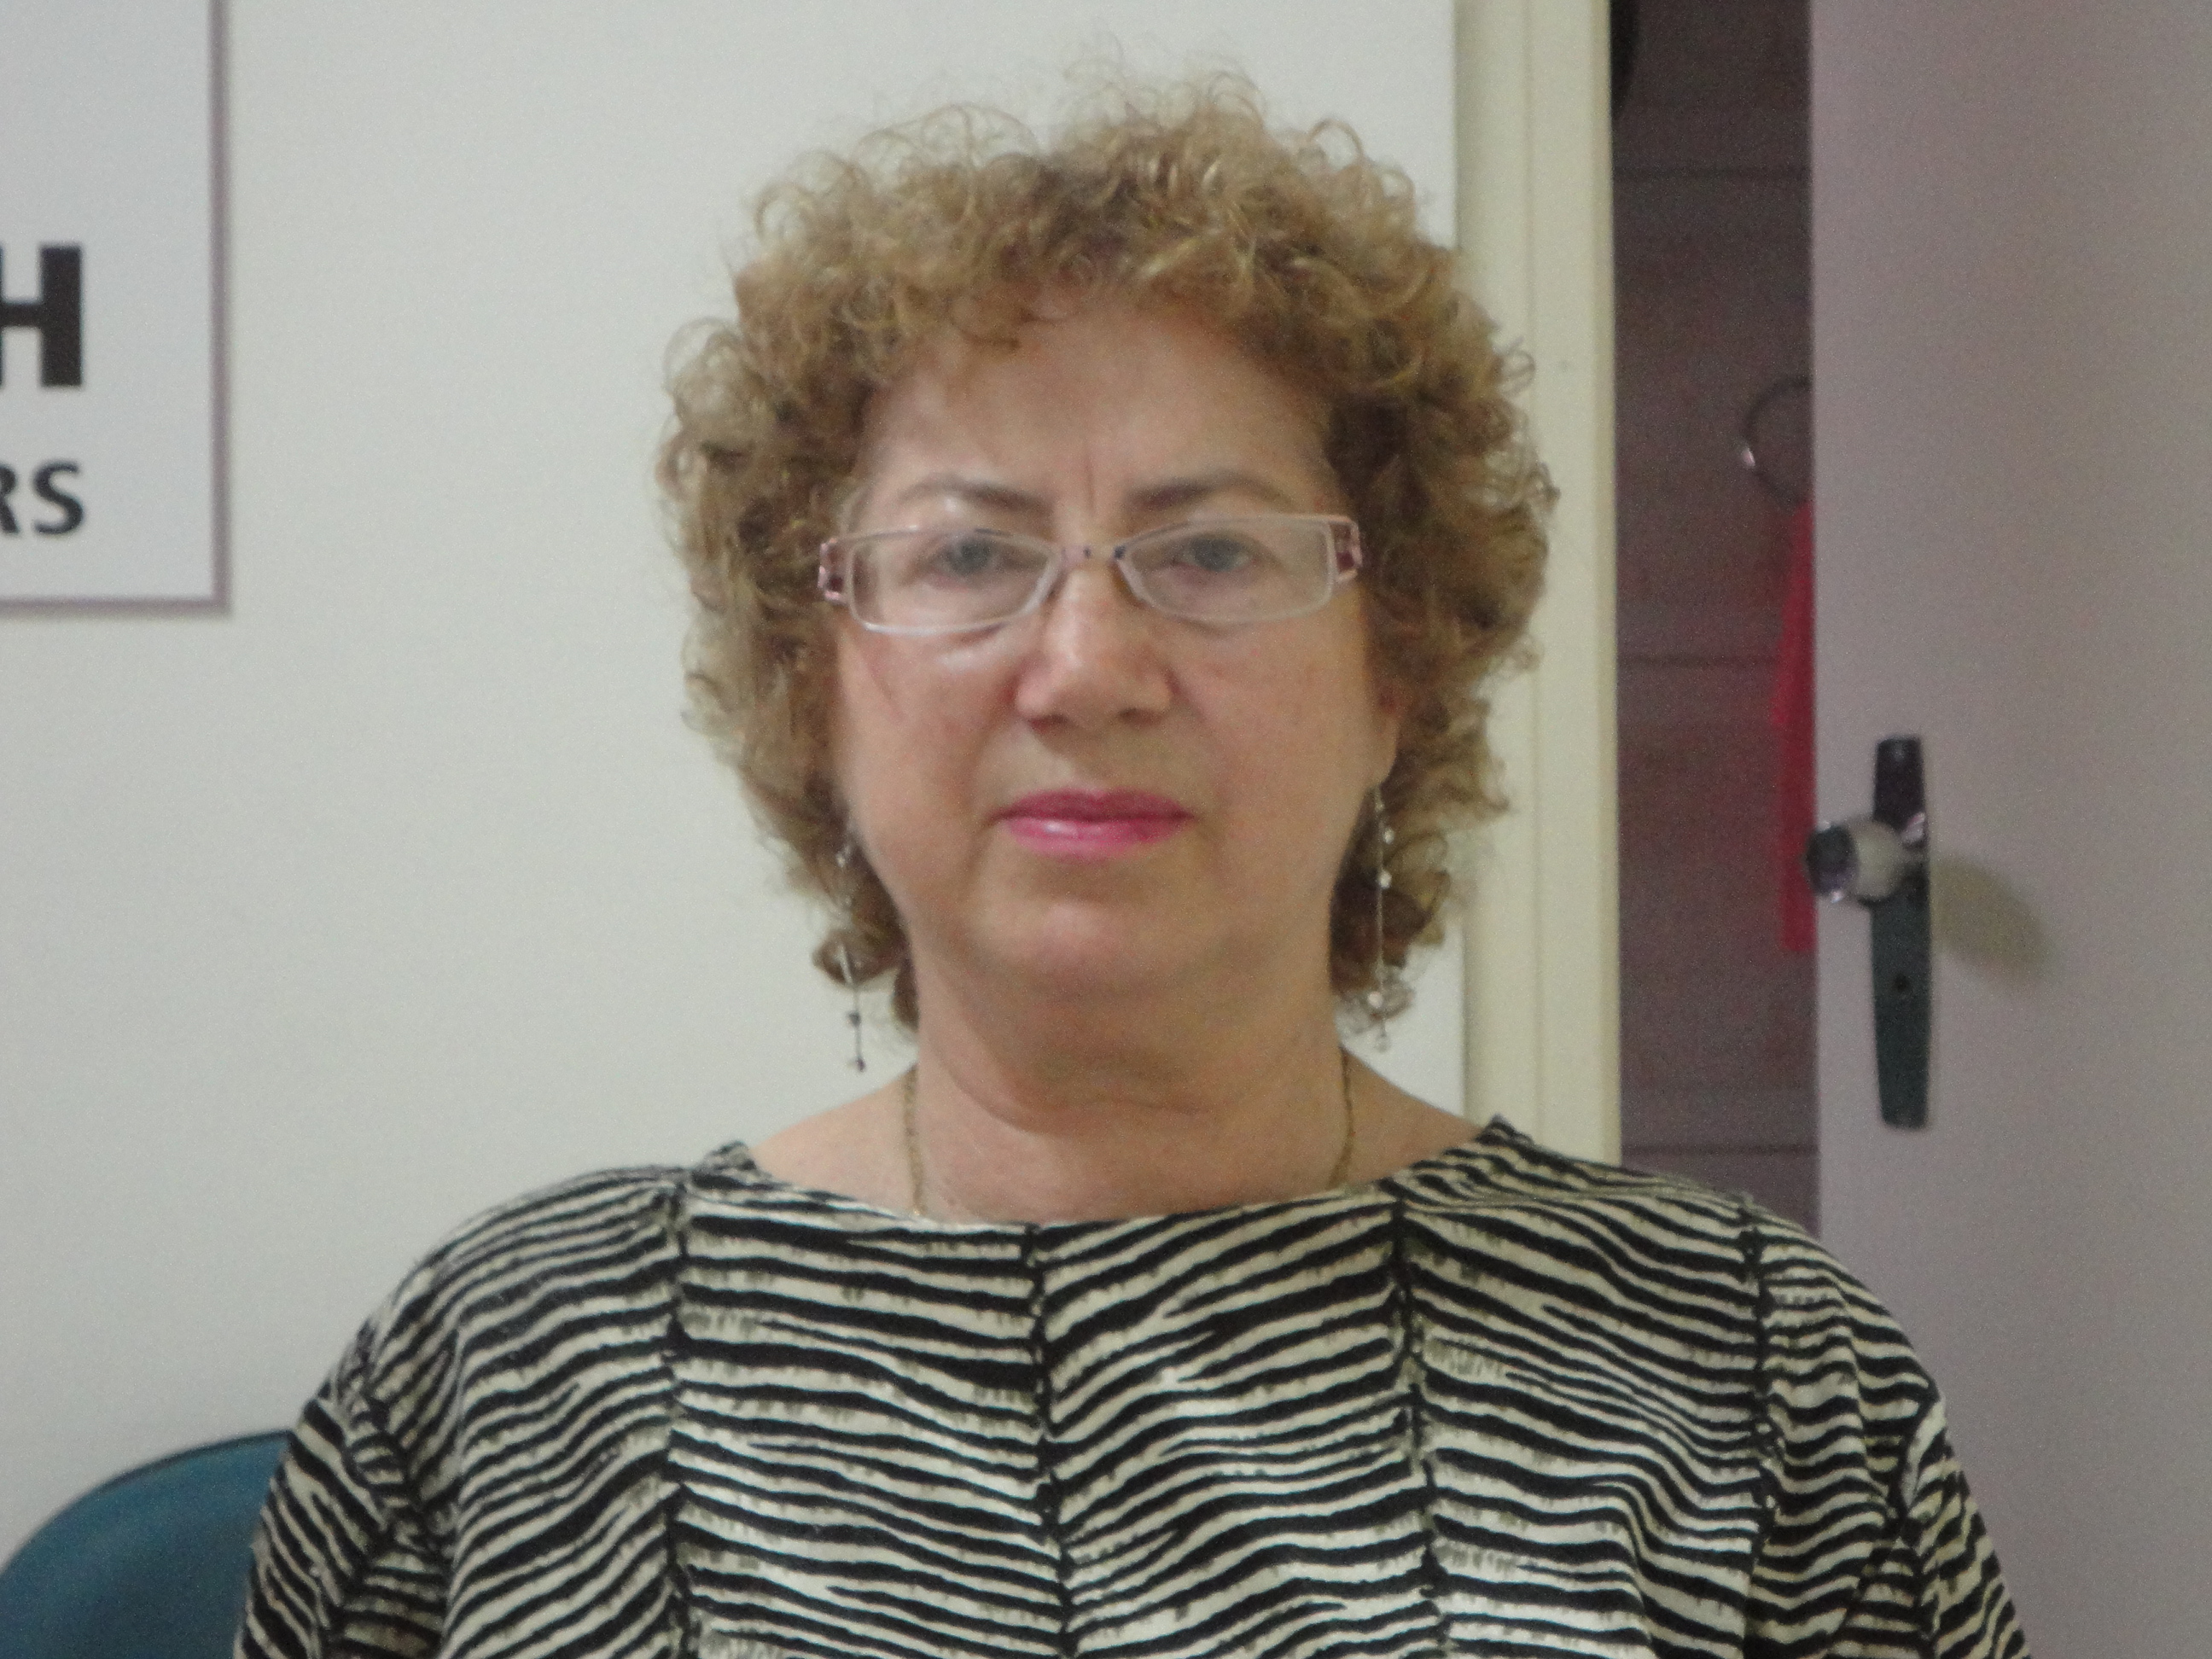 Jovania CUIDADORA, 58 anos, viuvo(a), 1